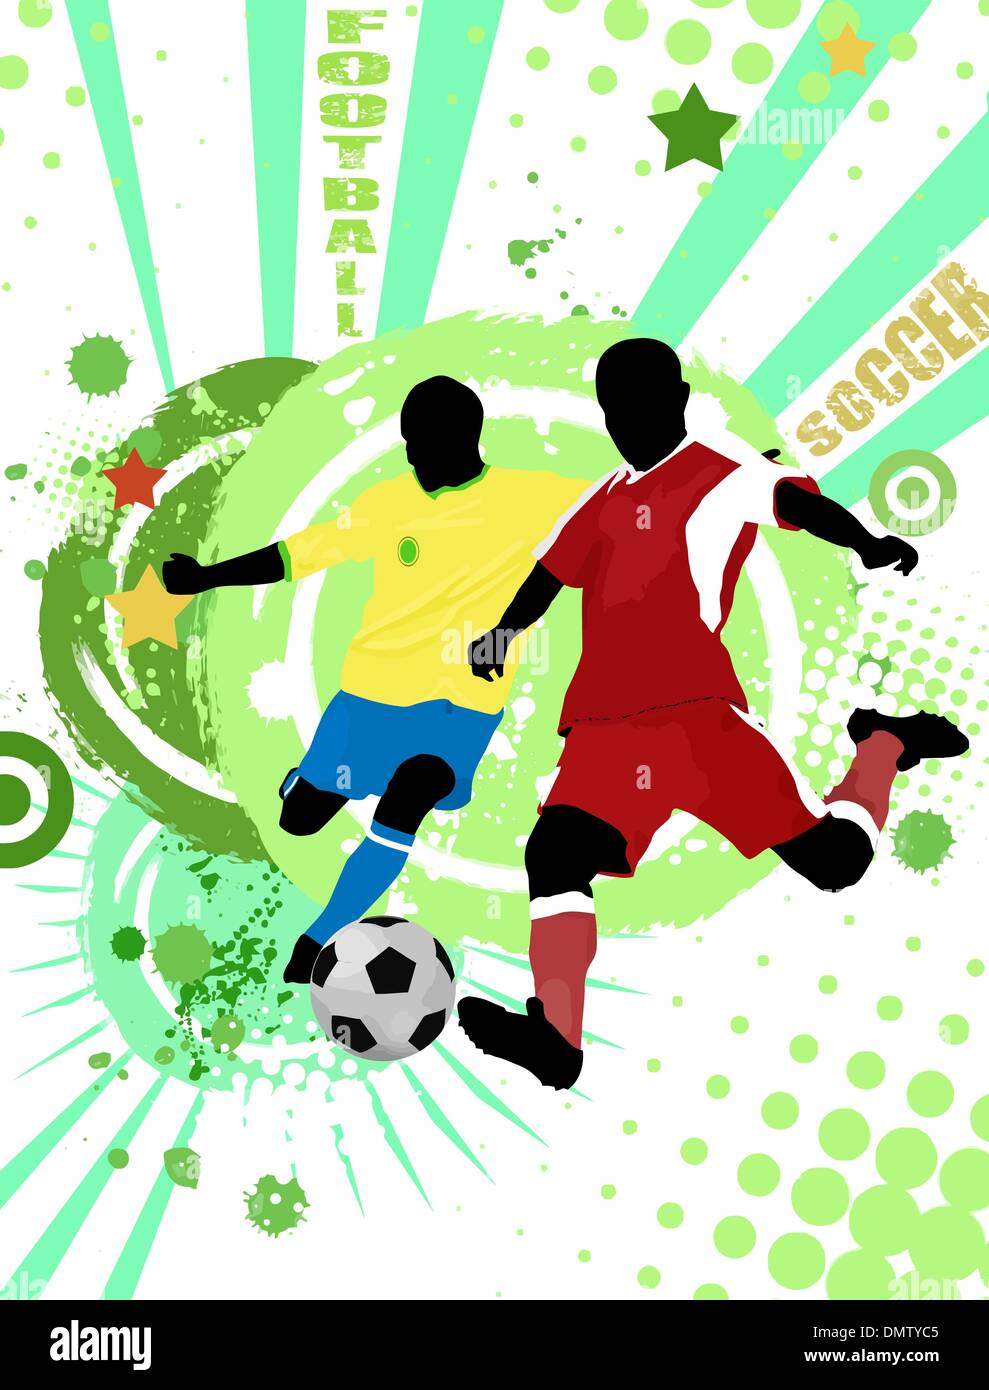 Fußball-Poster-Hintergrund Stock-Vektorgrafik - Alamy